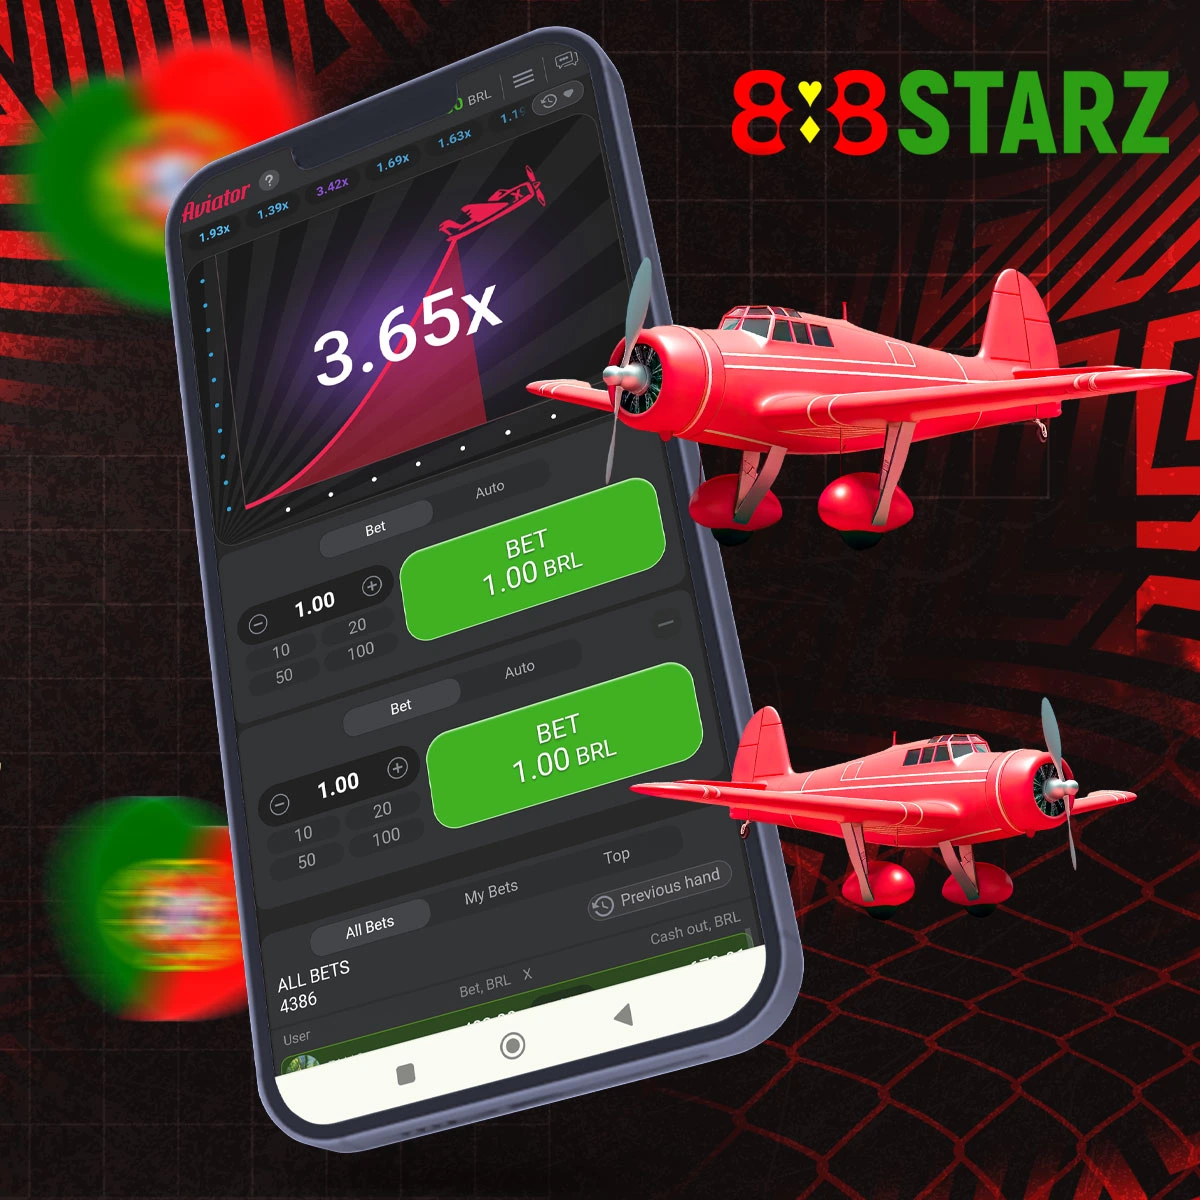 Características do jogo 888Starz Aviator